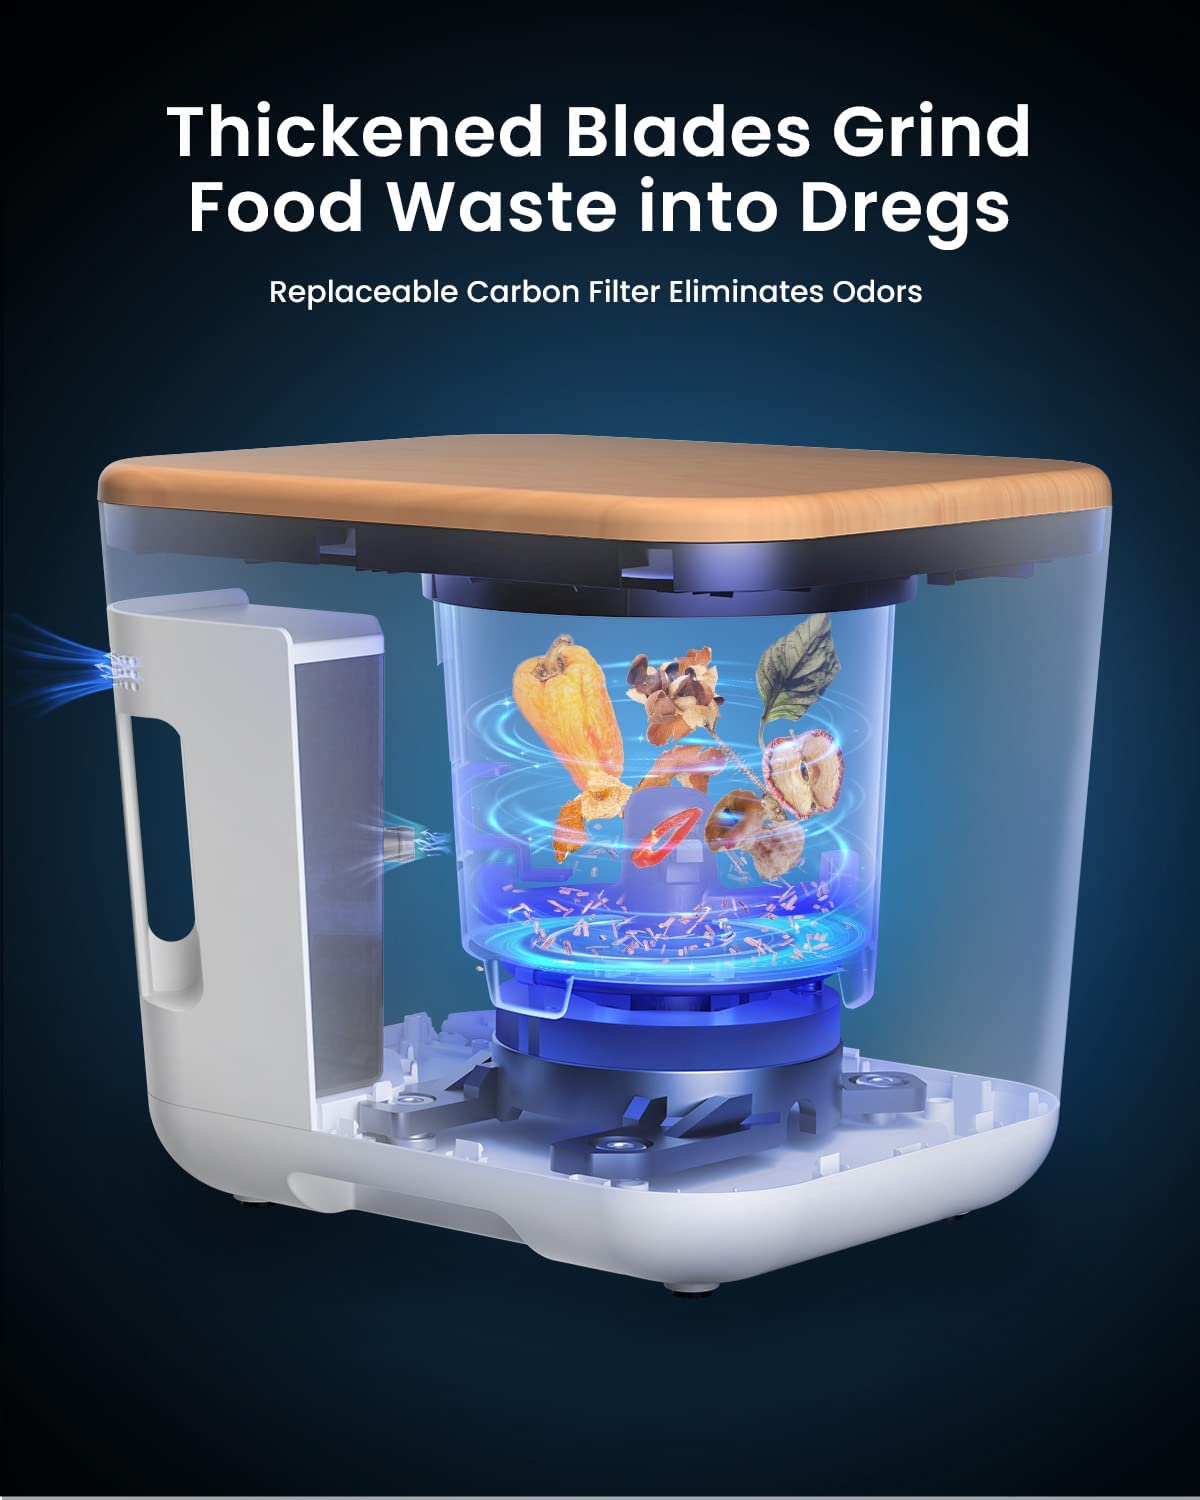 iDOO Smart Kitchen Composter - _wf_cus Best Seller by idoo